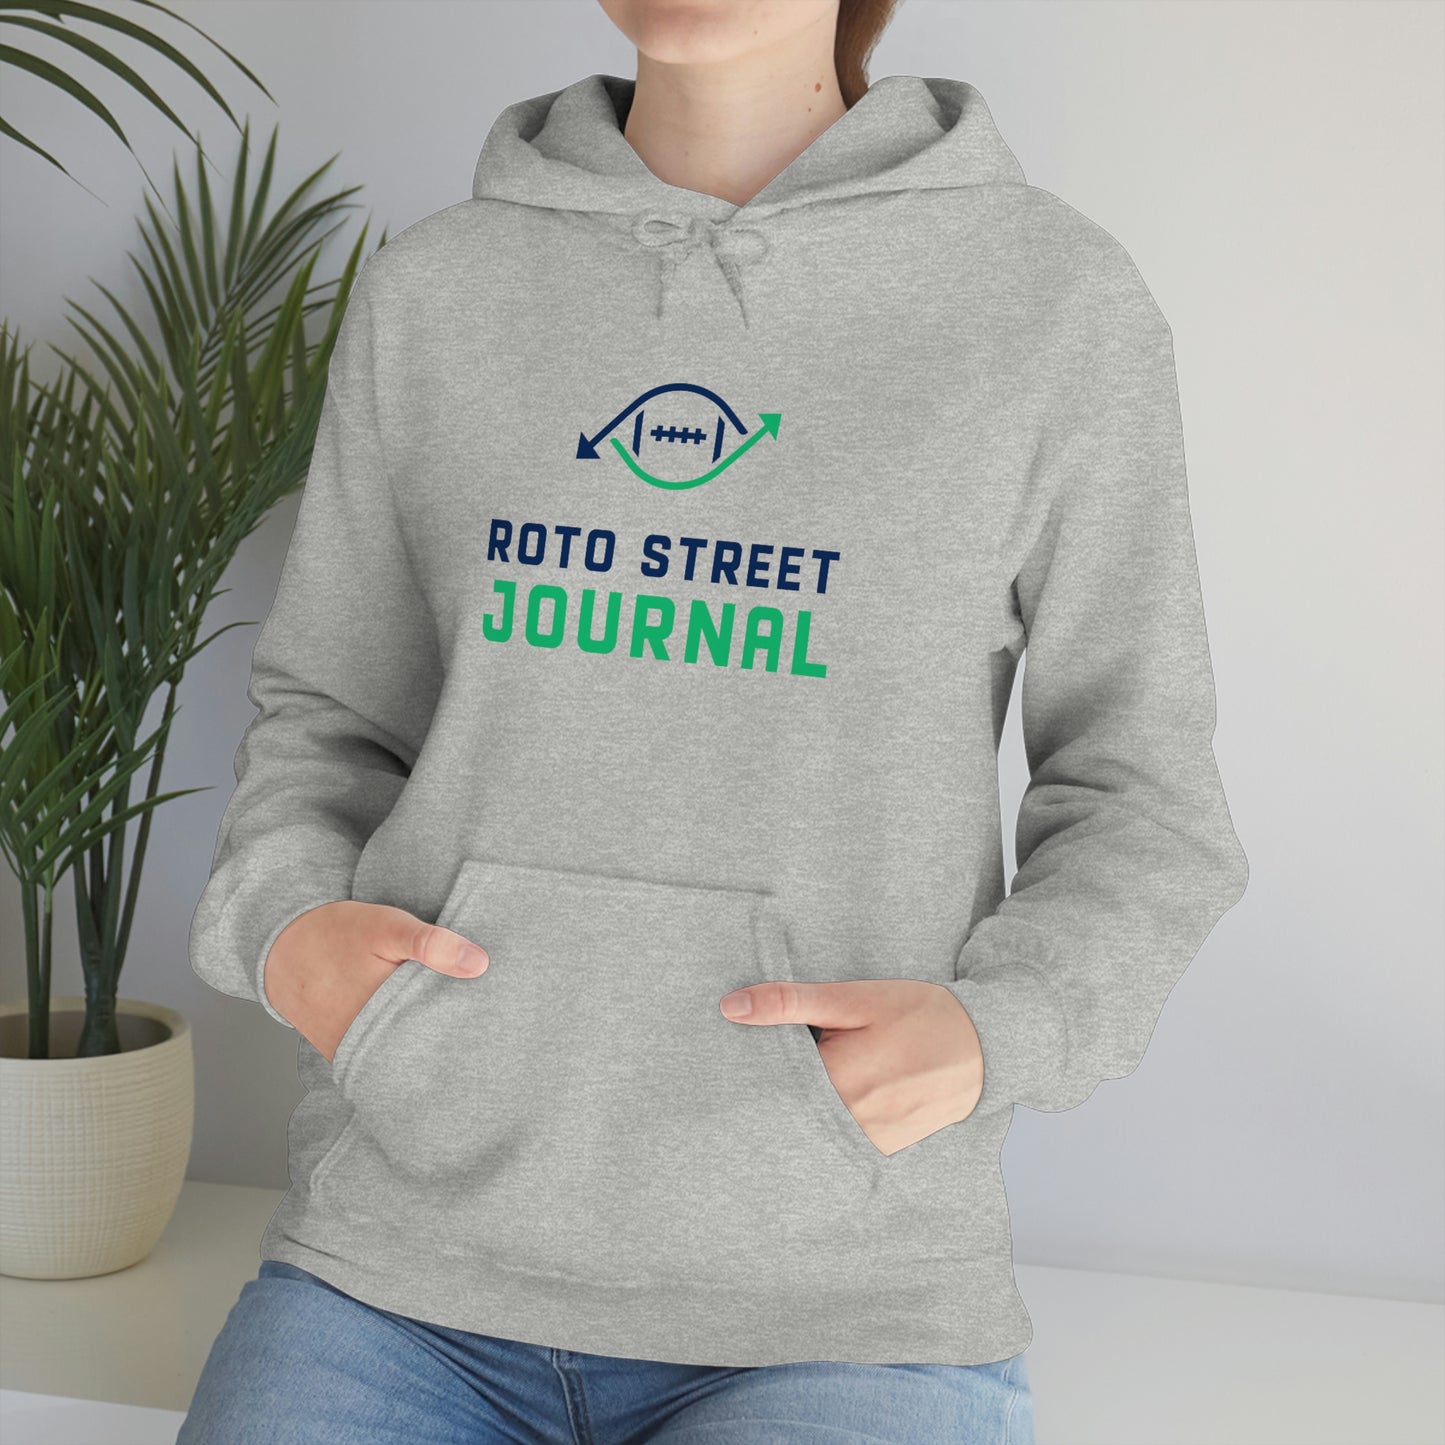 Roto Street Journal Hoodie Sweatshirt - Fantasy Football Sweatshirt